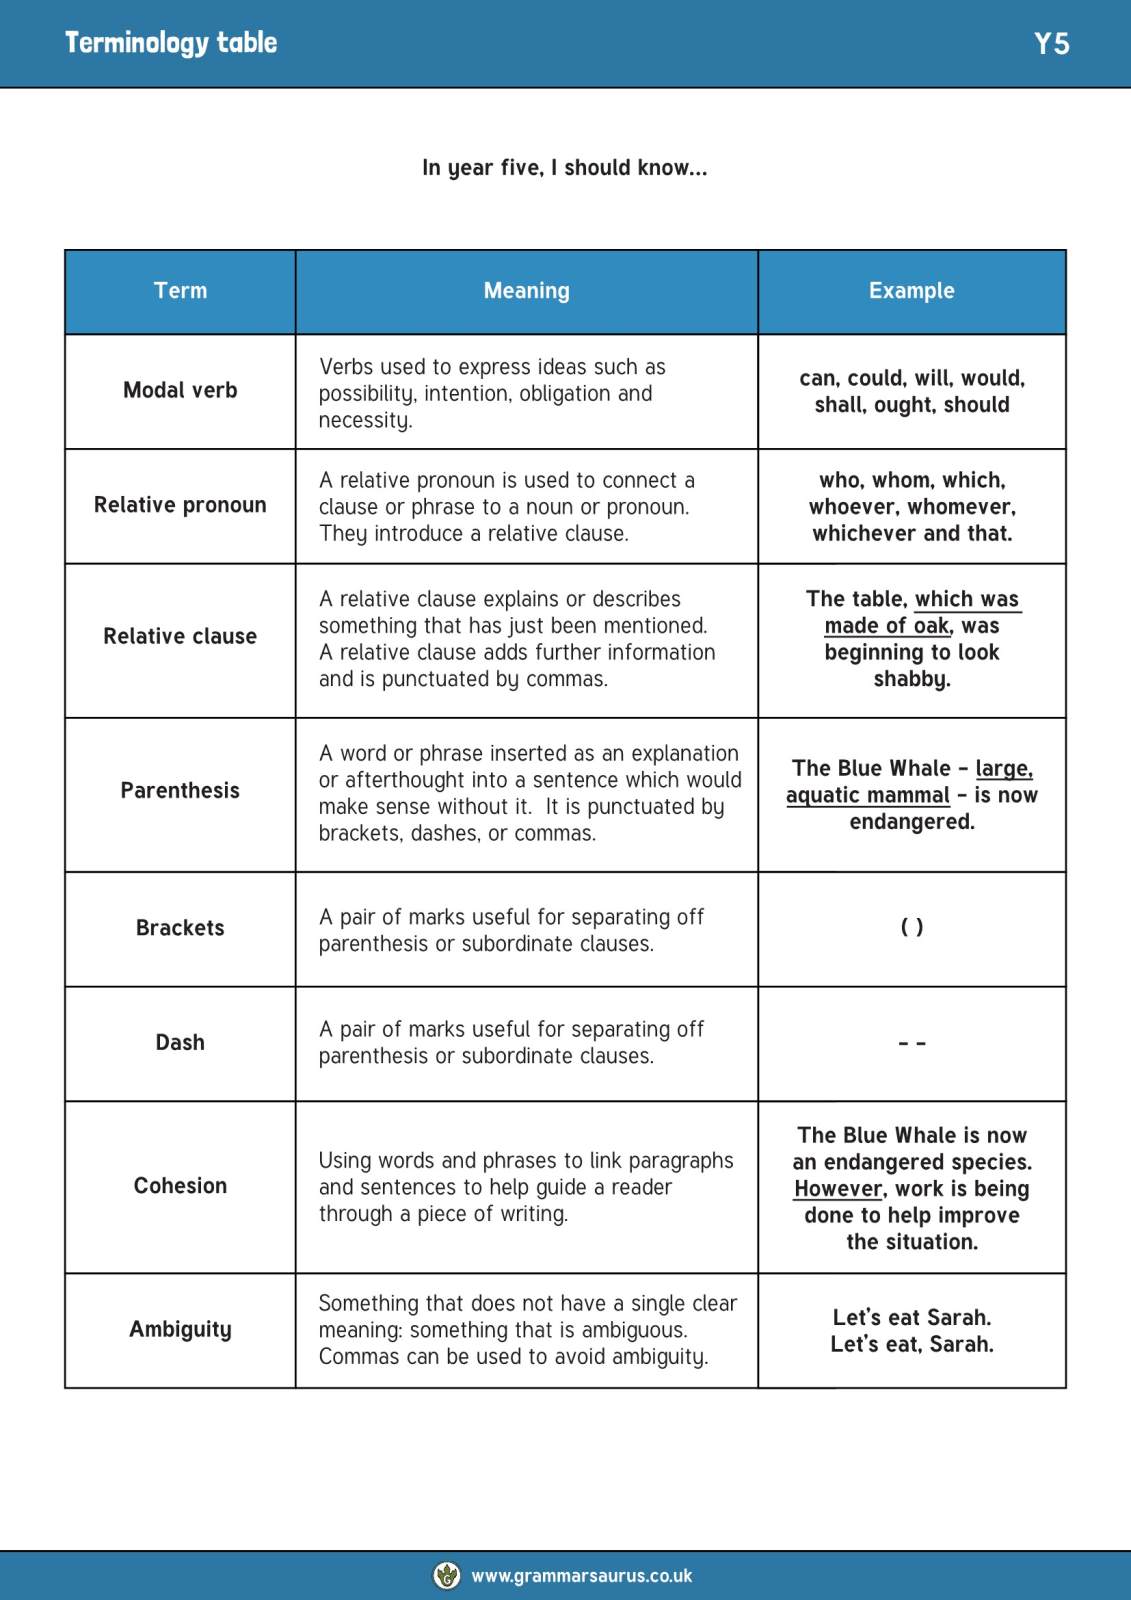 Grammar terminology table Yr5